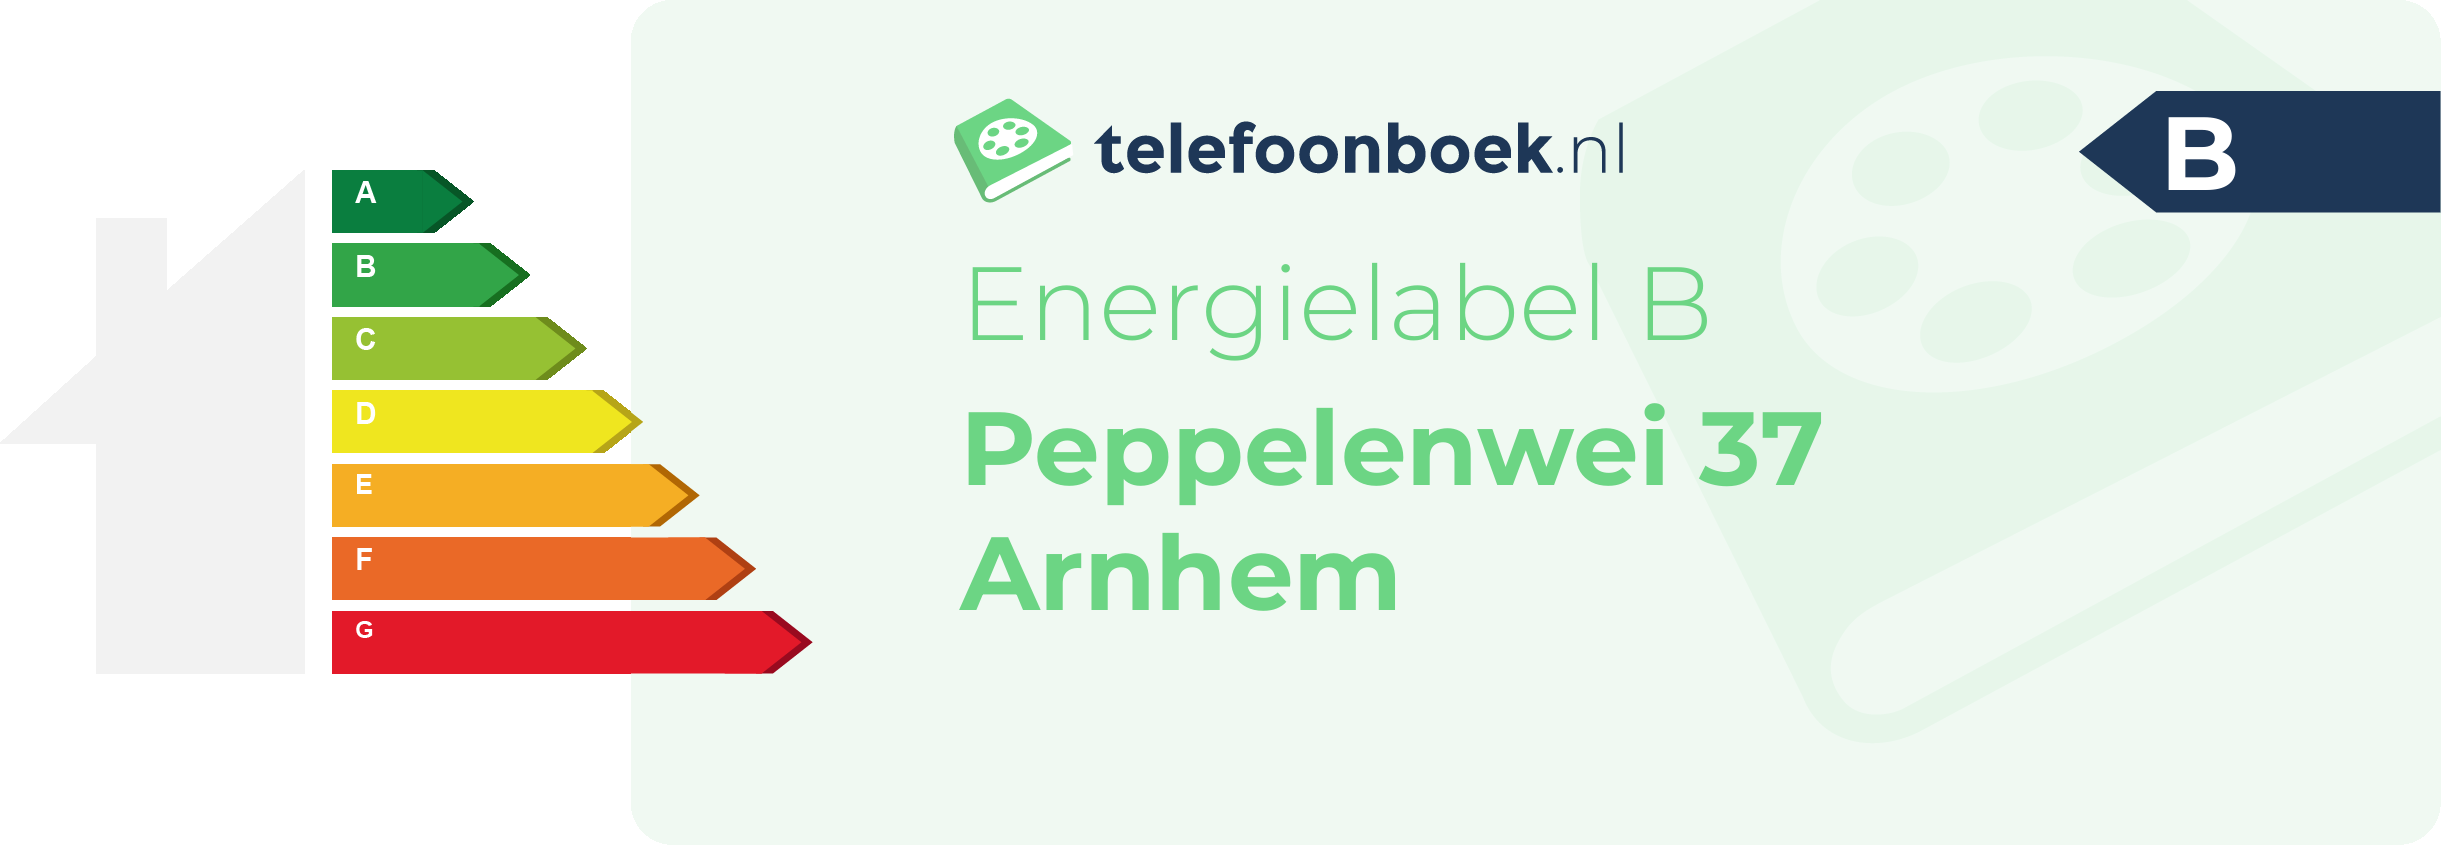 Energielabel Peppelenwei 37 Arnhem